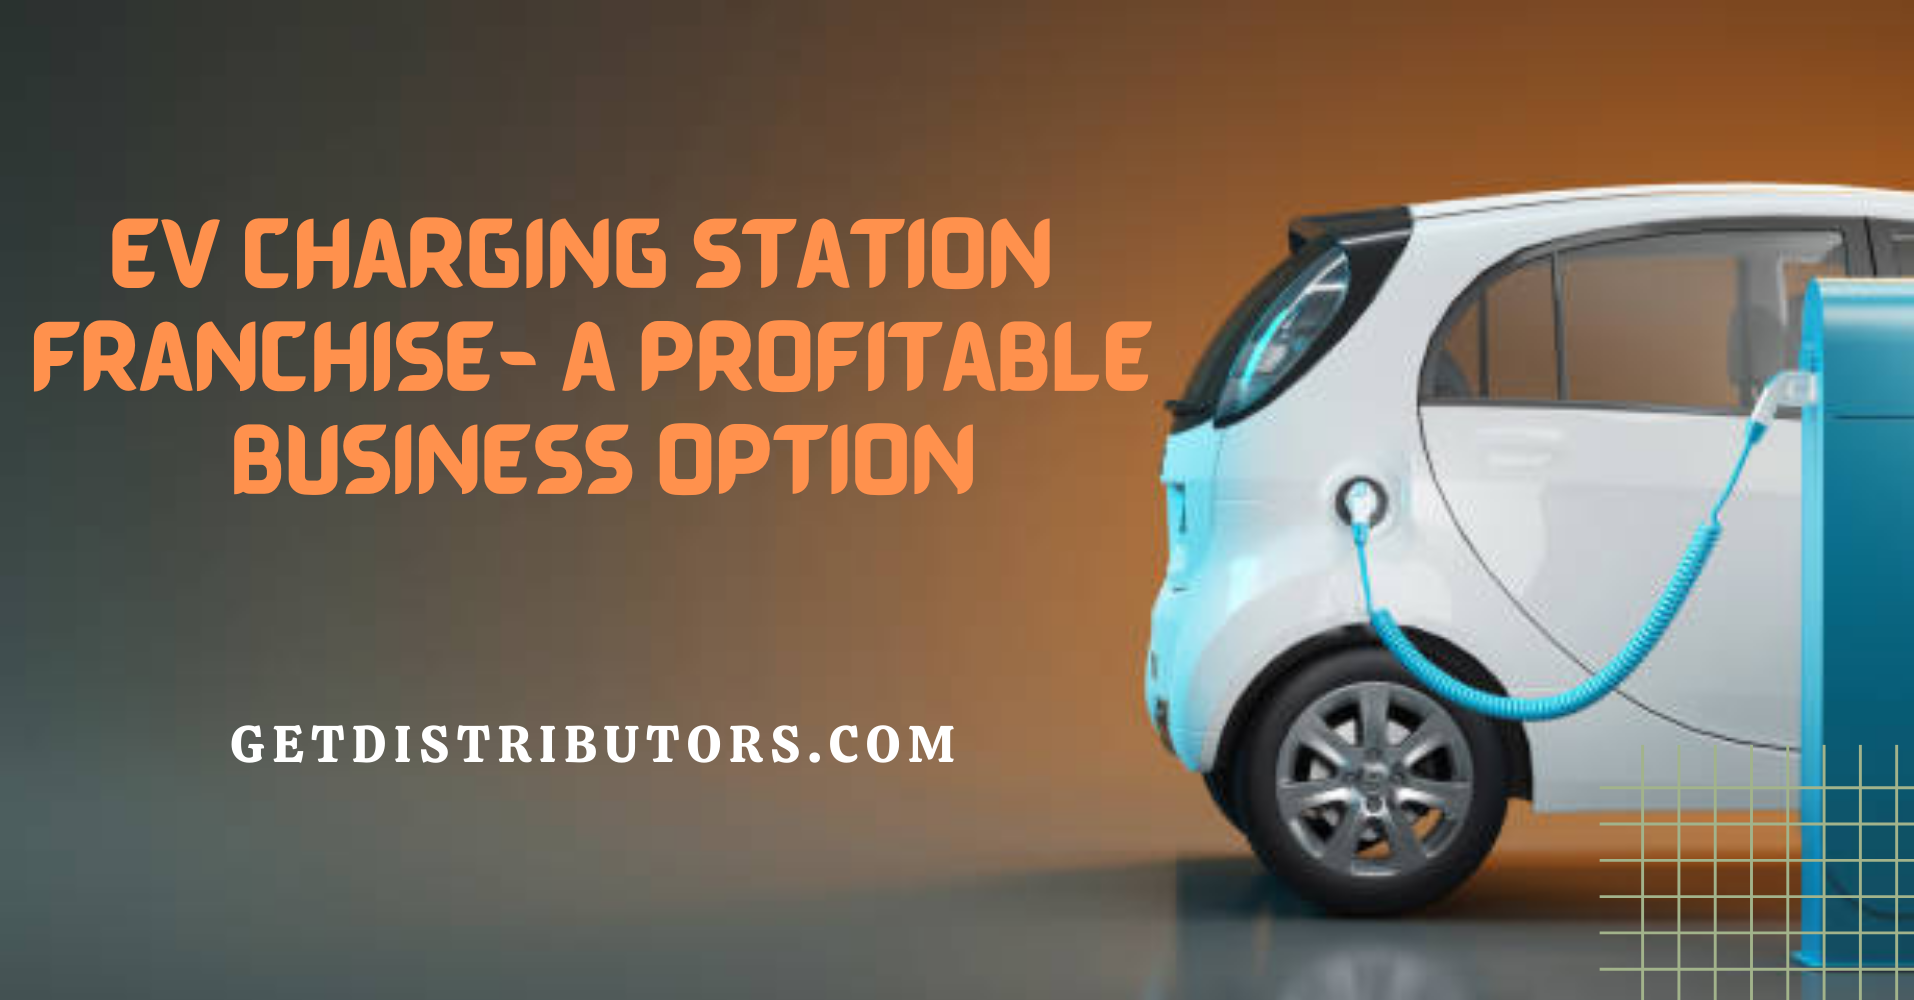 EV charging station franchise- a profitable business option